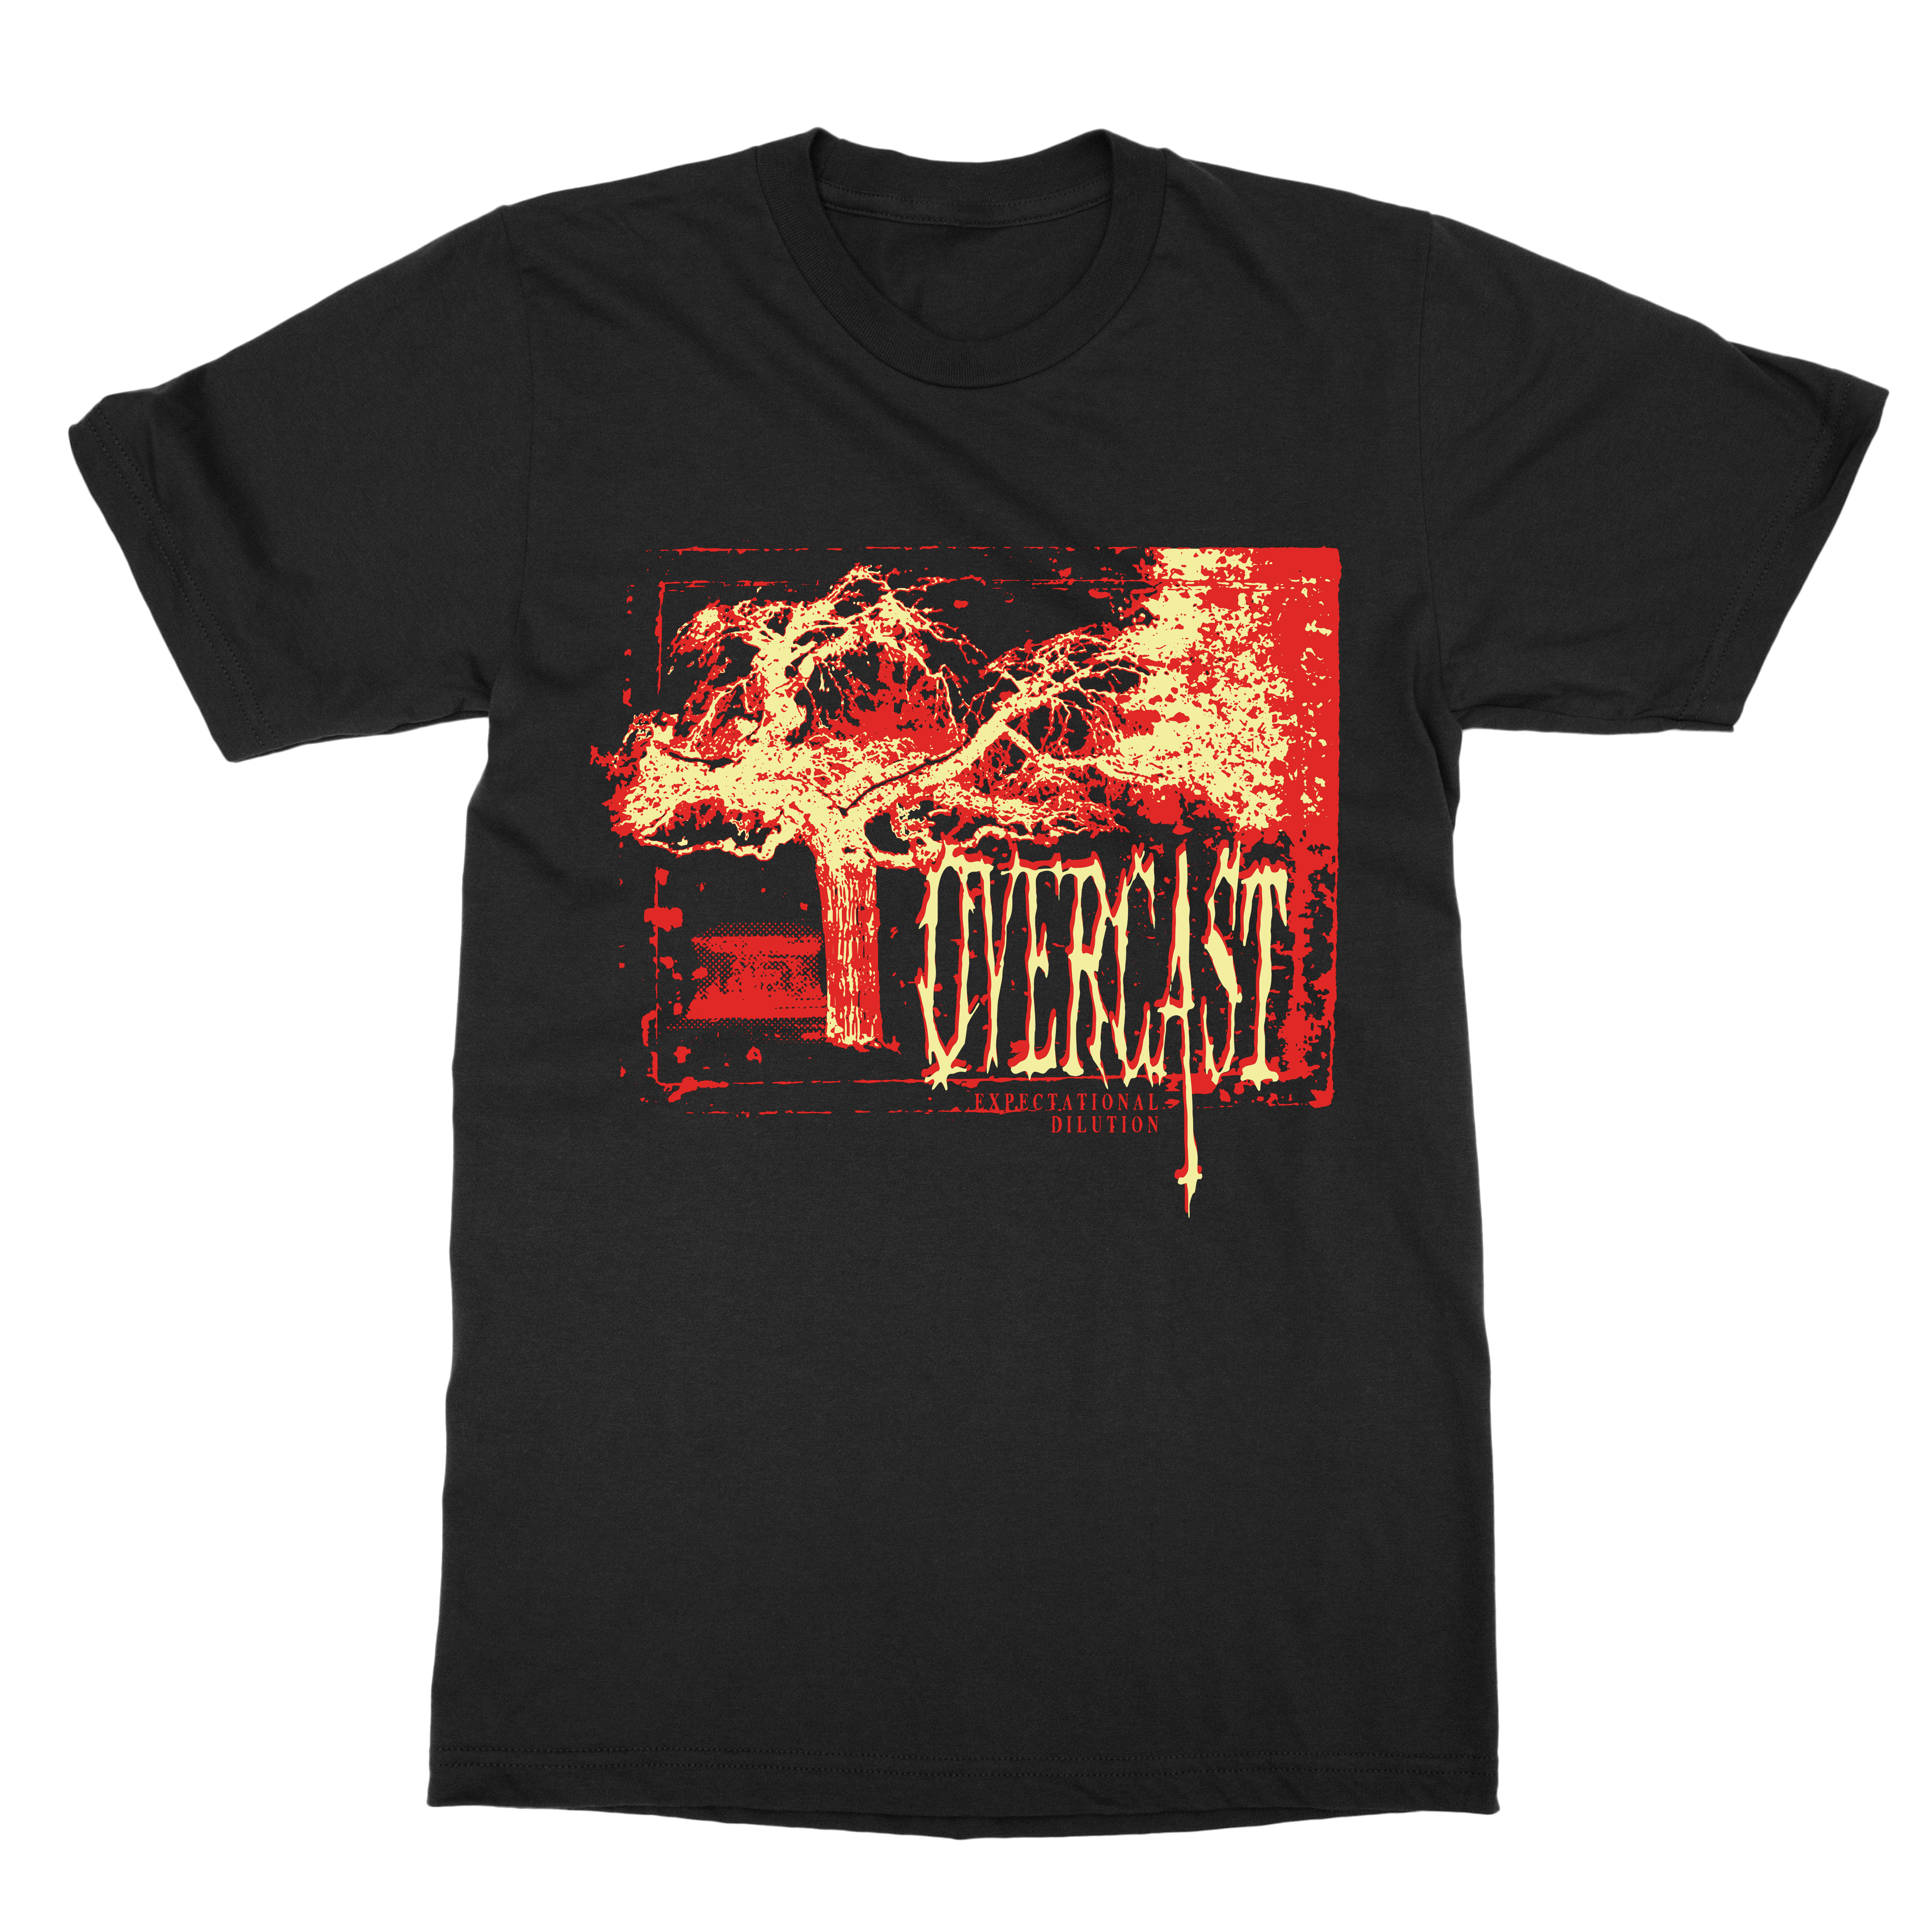 Overcast | Expectational Dilution T-Shirt